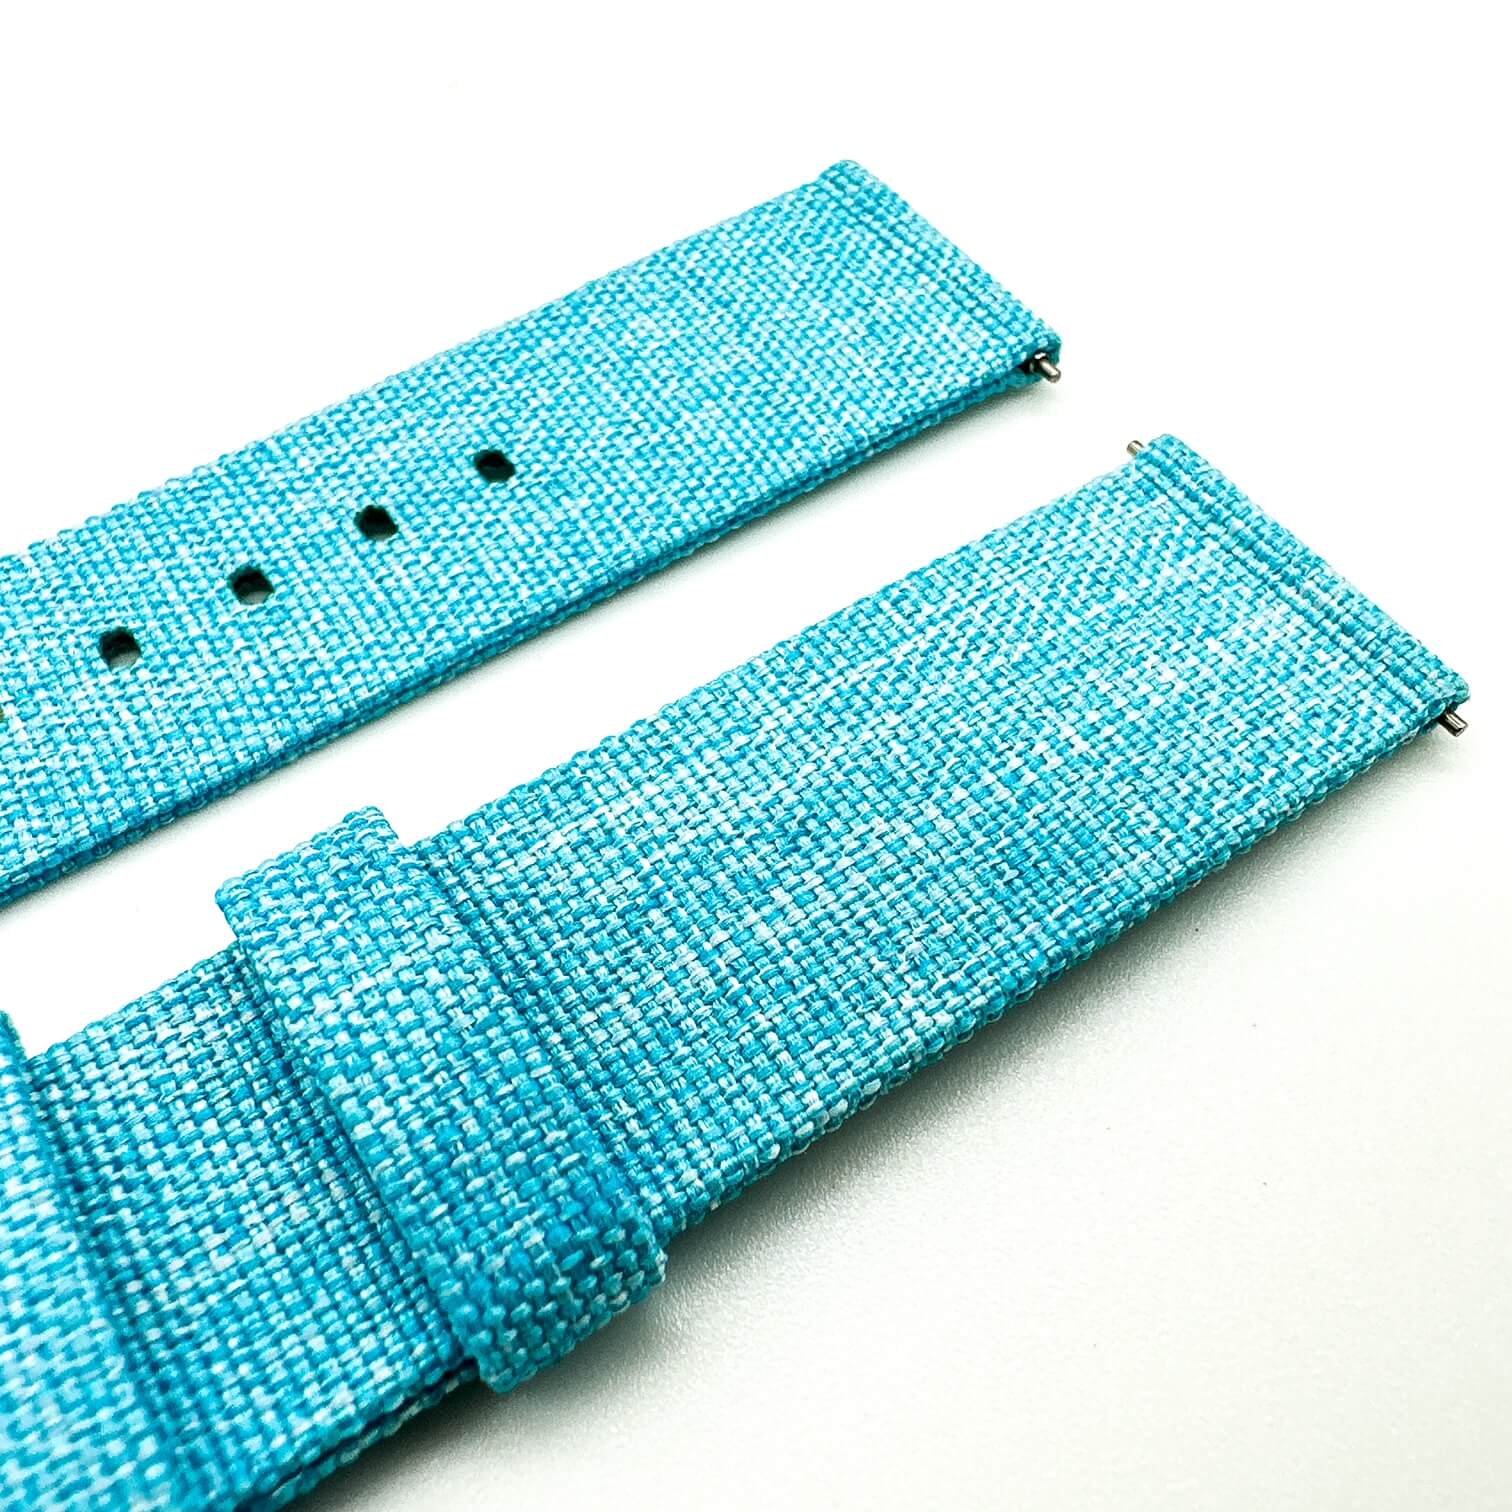 Woven Nylon Fabric Quick Release Watch Strap Light Blue 3